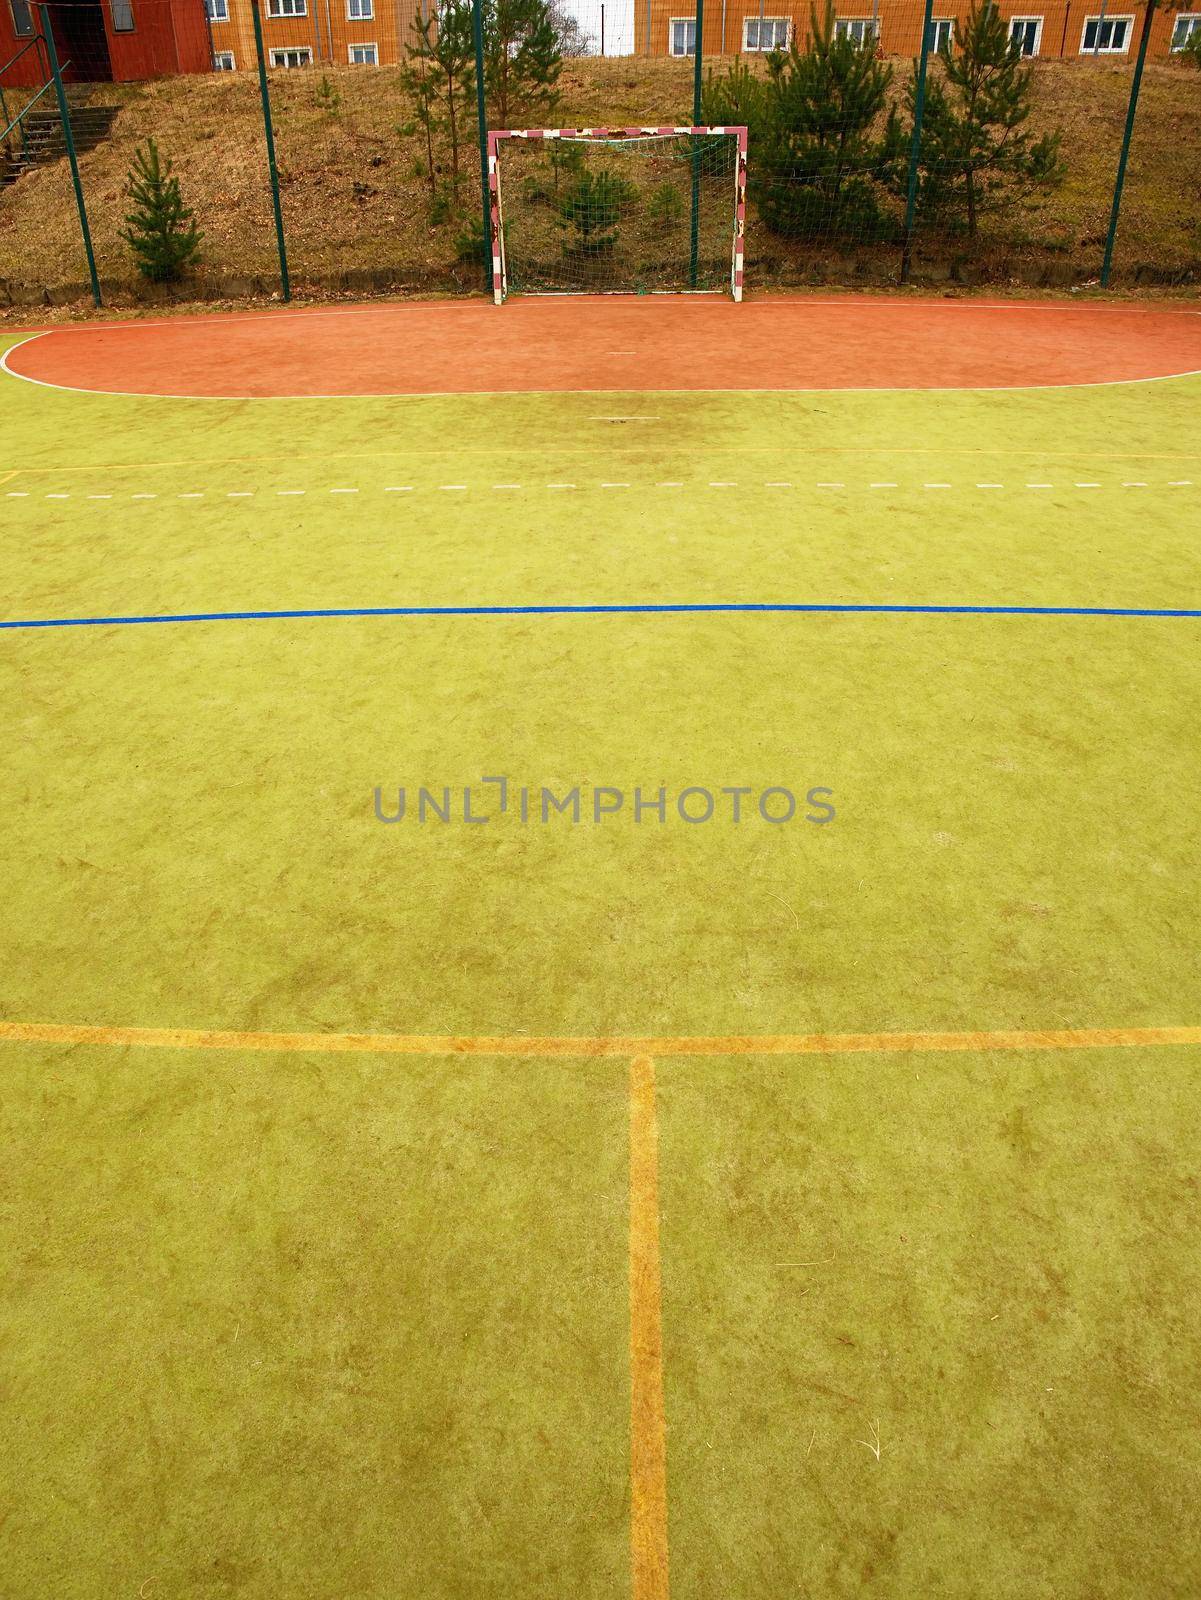 Empty gate. Outdoor football or handball playground plastic light green surface by rdonar2